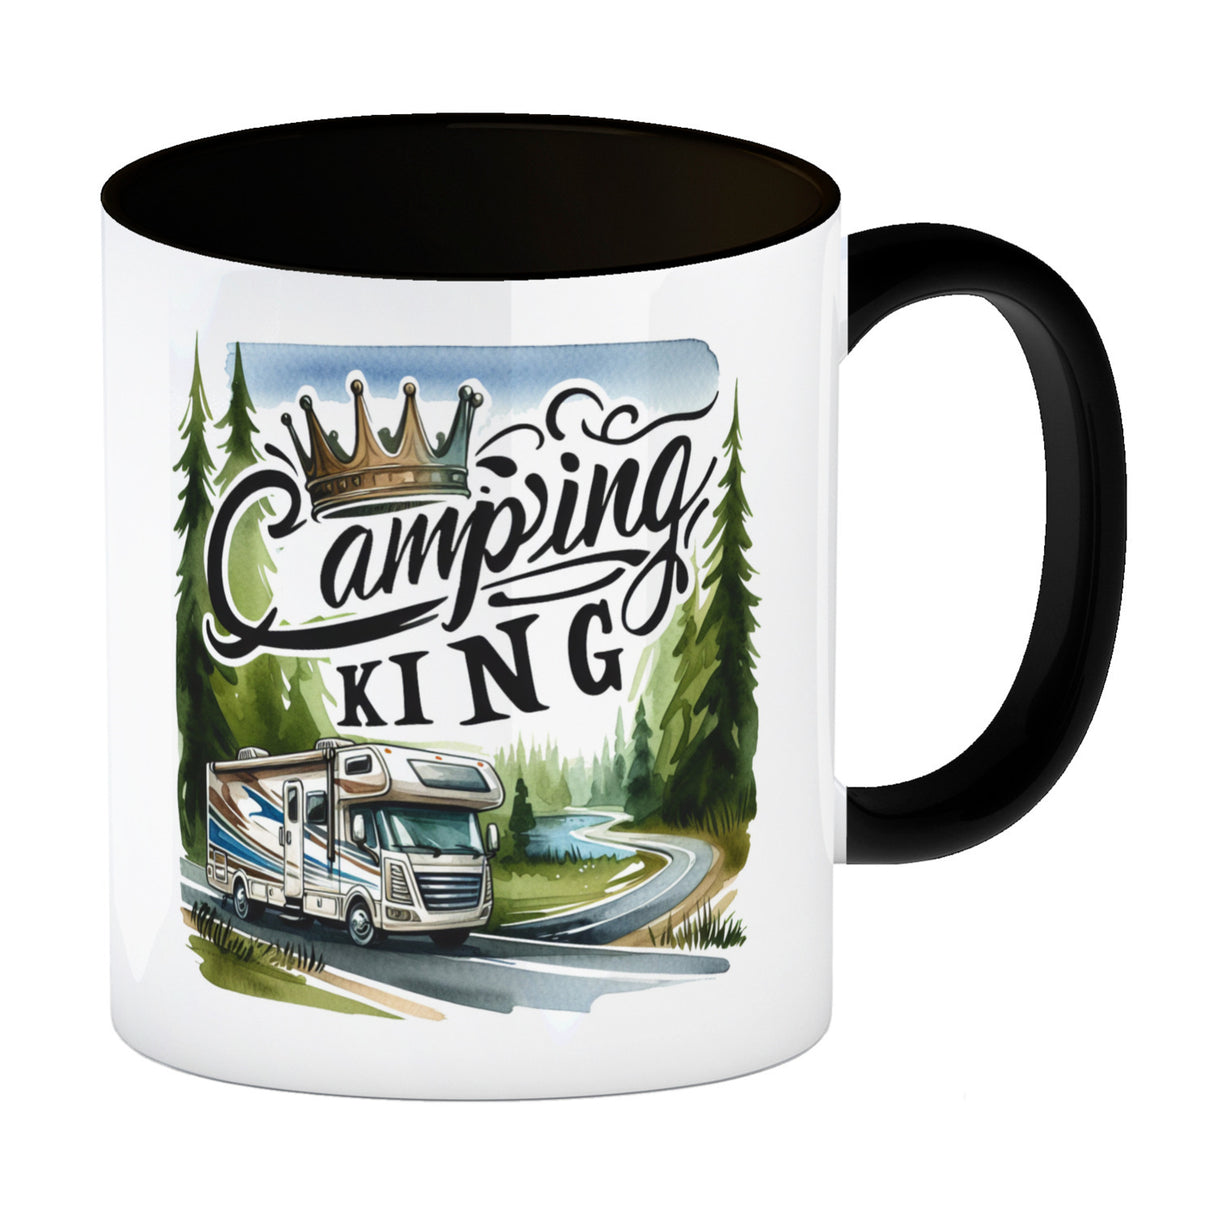 Camping King mit Wohnmobil Kaffeebecher